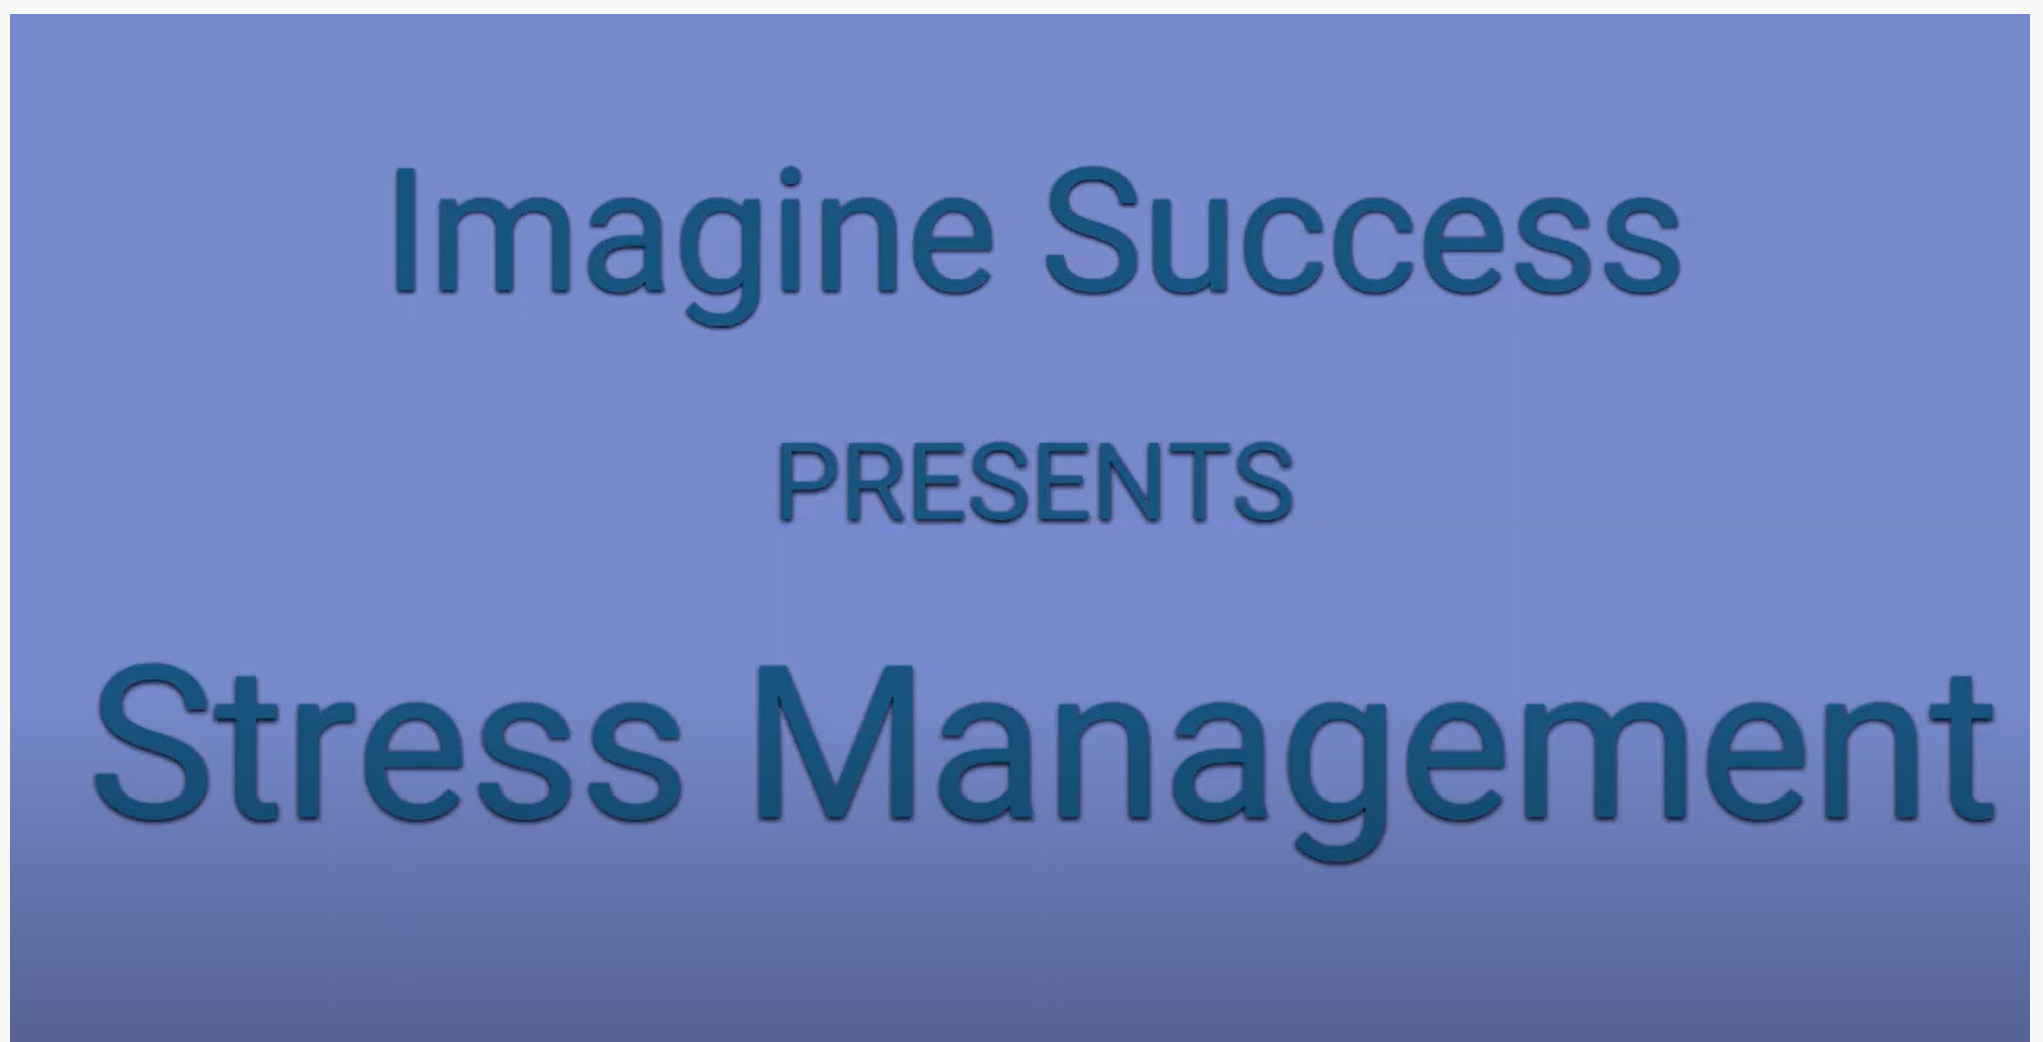 The words "Imagine Success Presents Stress Management"